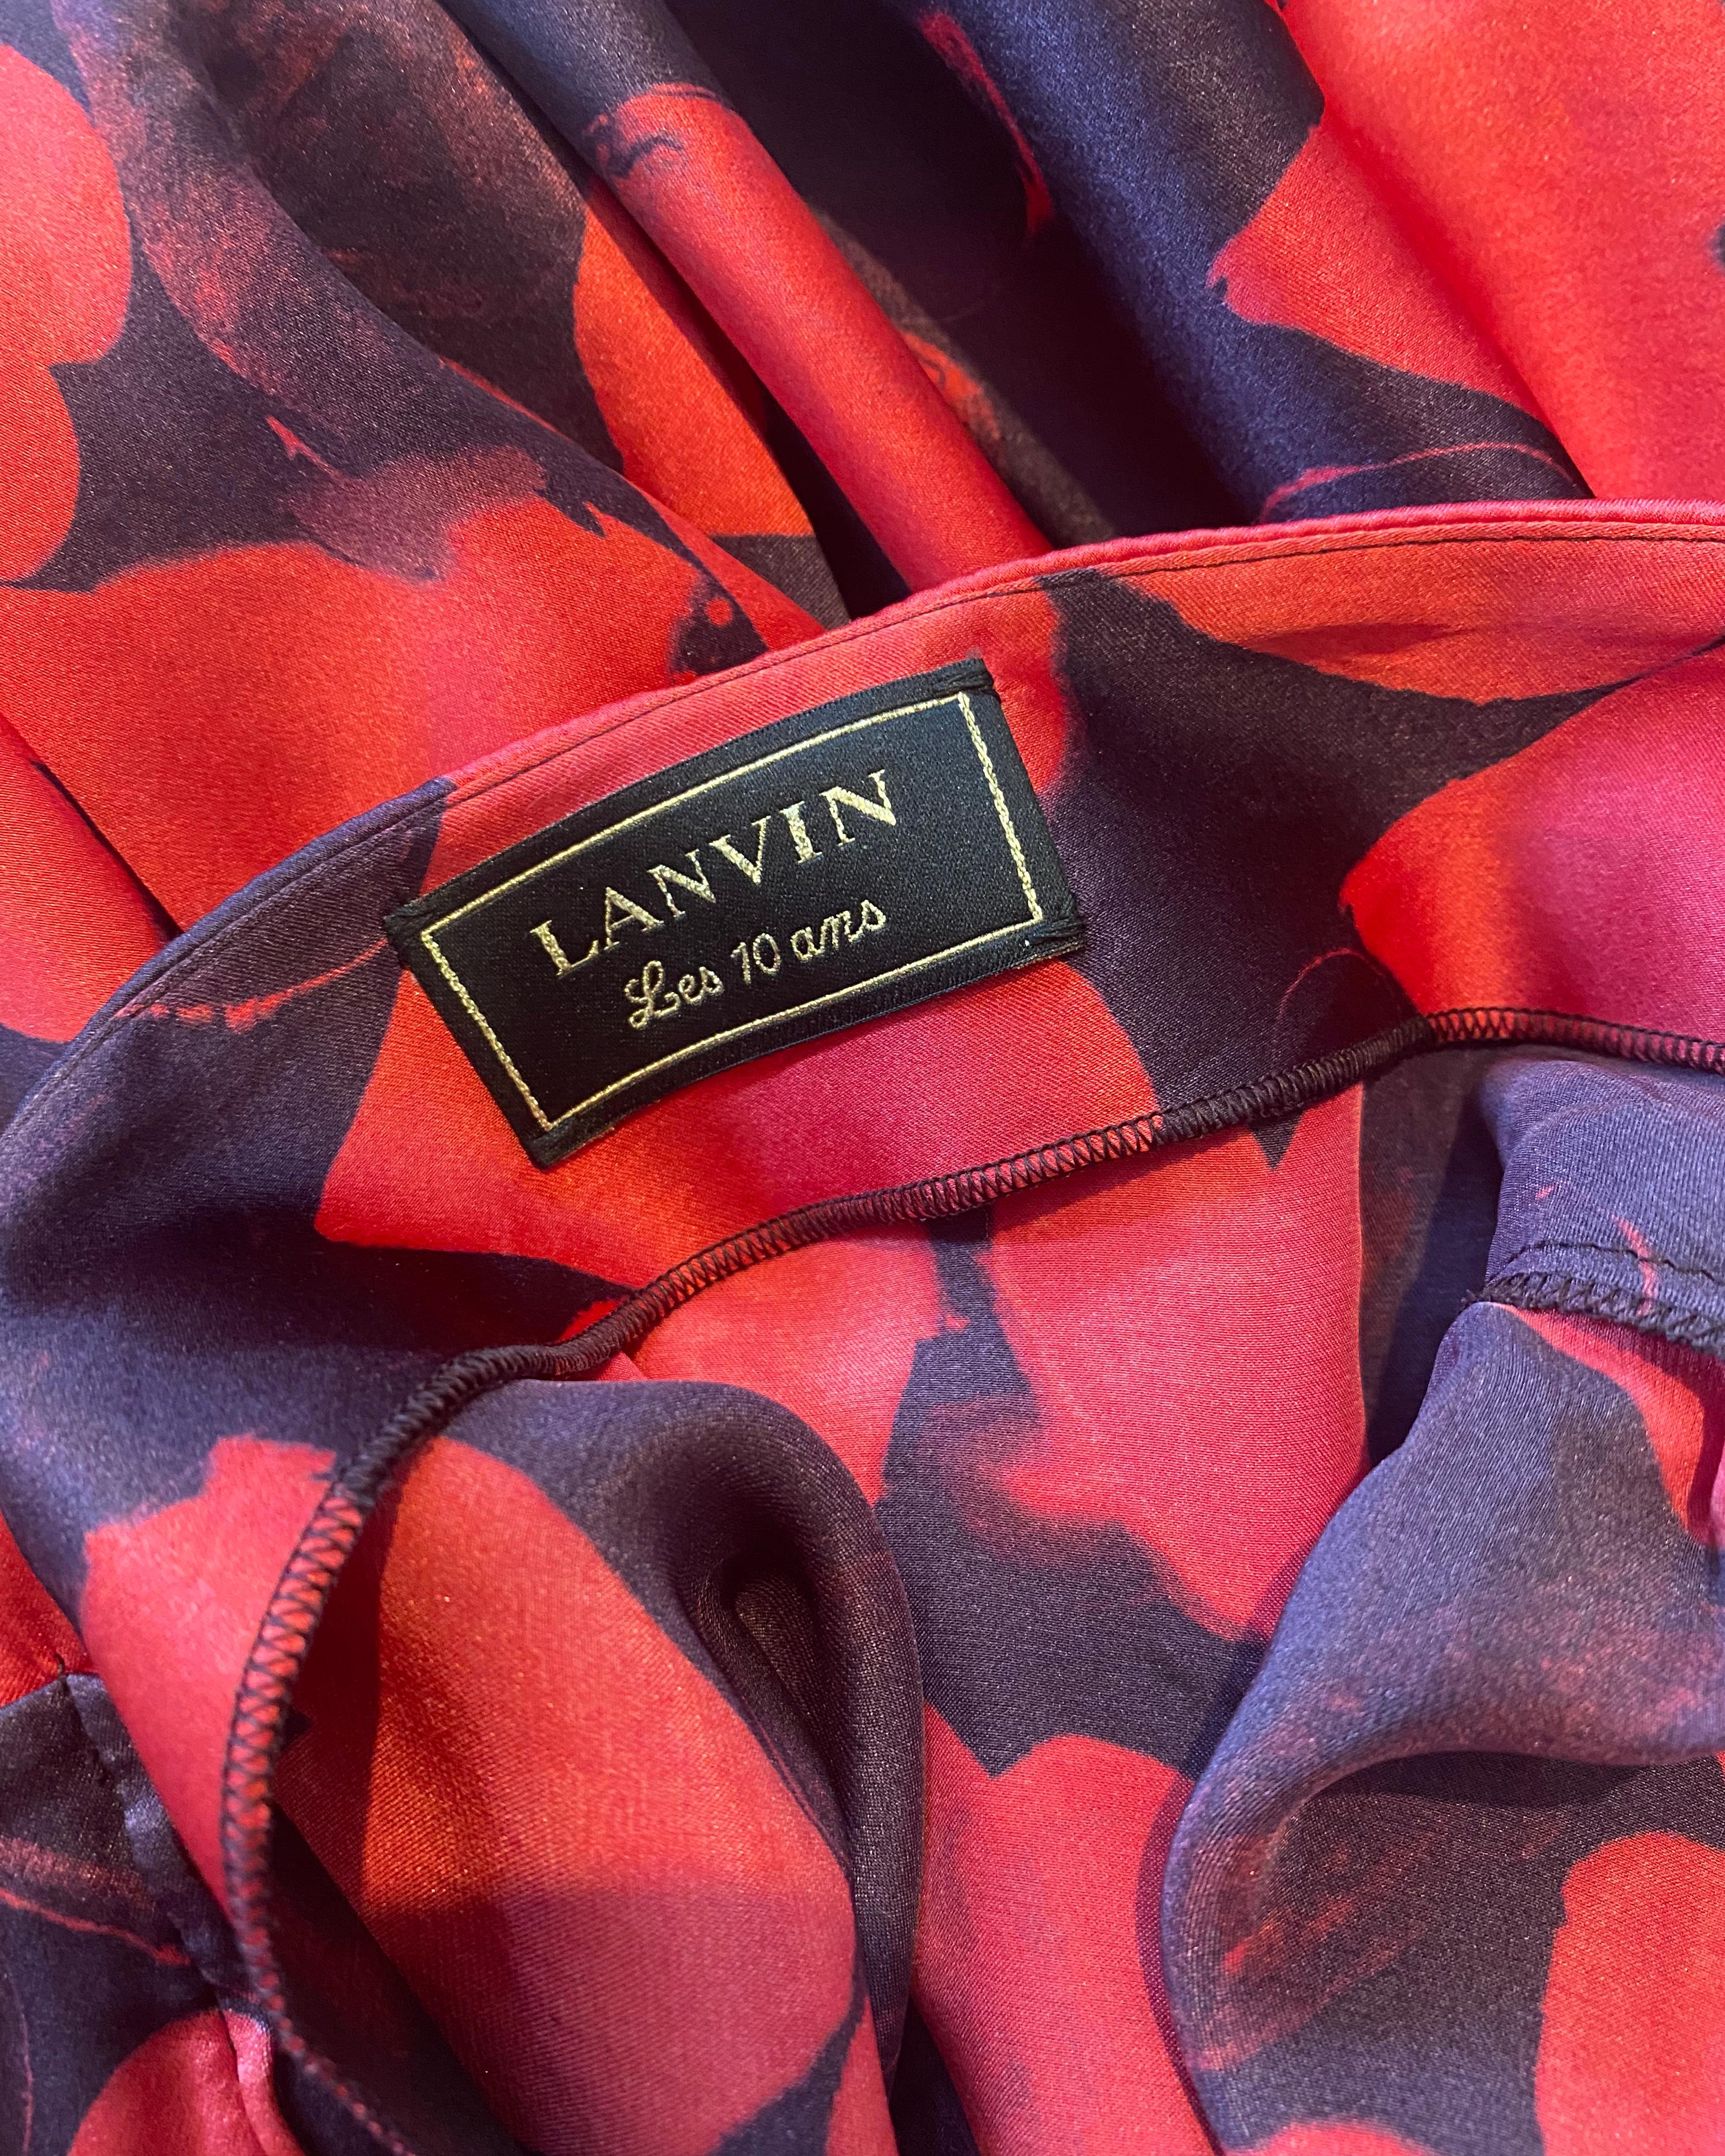 Lanvin pre/FW 2012 10 yr anniversary black red heart print silk train gown dress For Sale 11